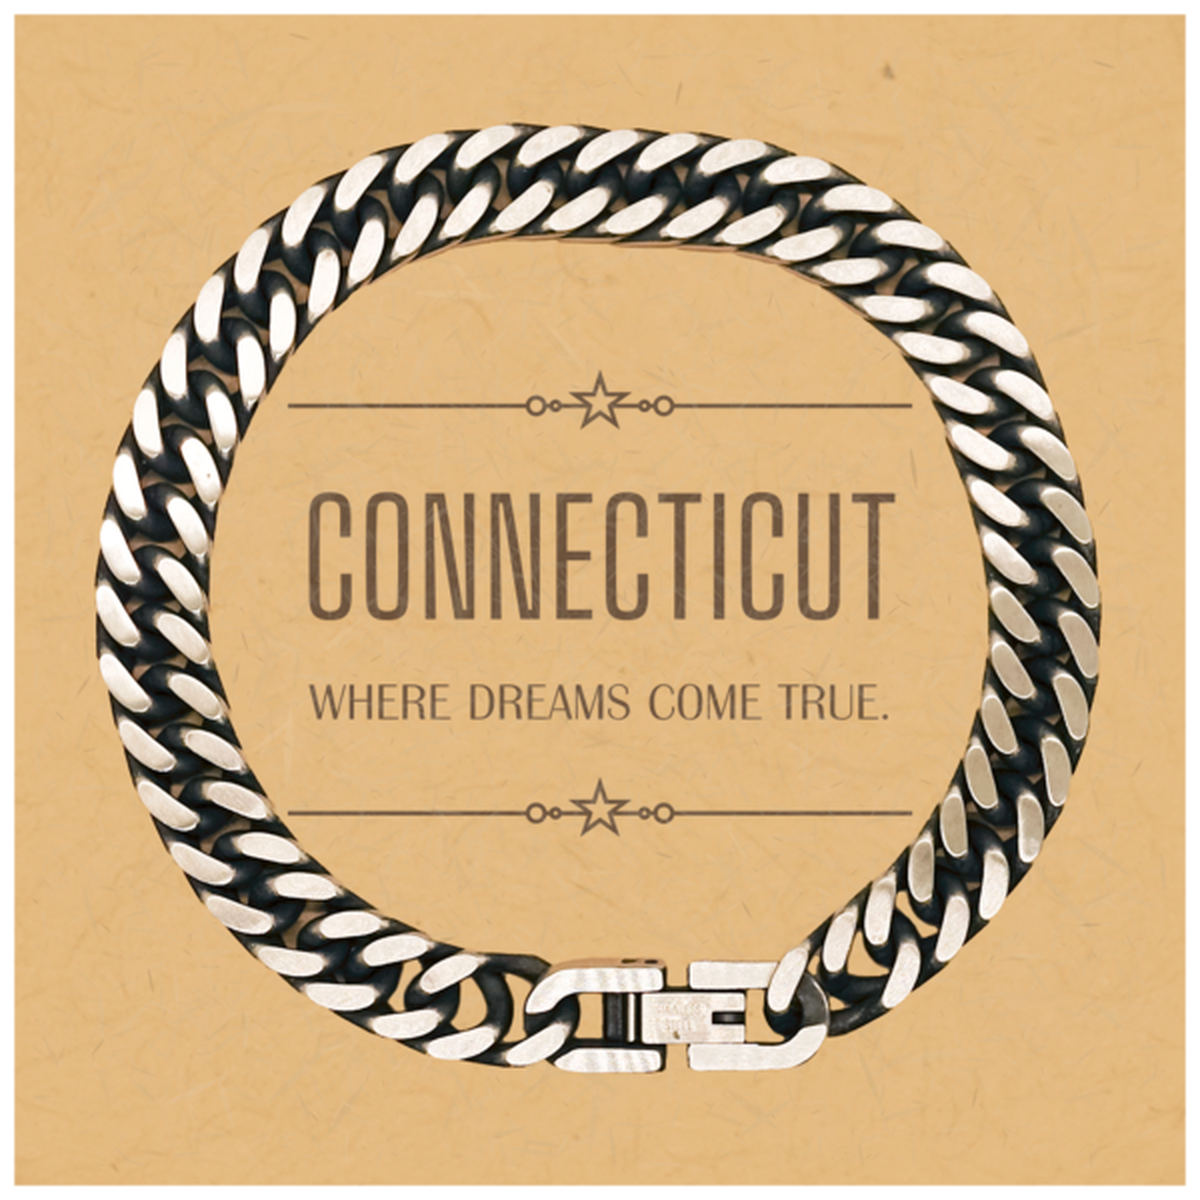 Love Connecticut State Cuban Link Chain Bracelet, Connecticut Where dreams come true, Birthday Christmas Inspirational Gifts For Connecticut Men, Women, Friends